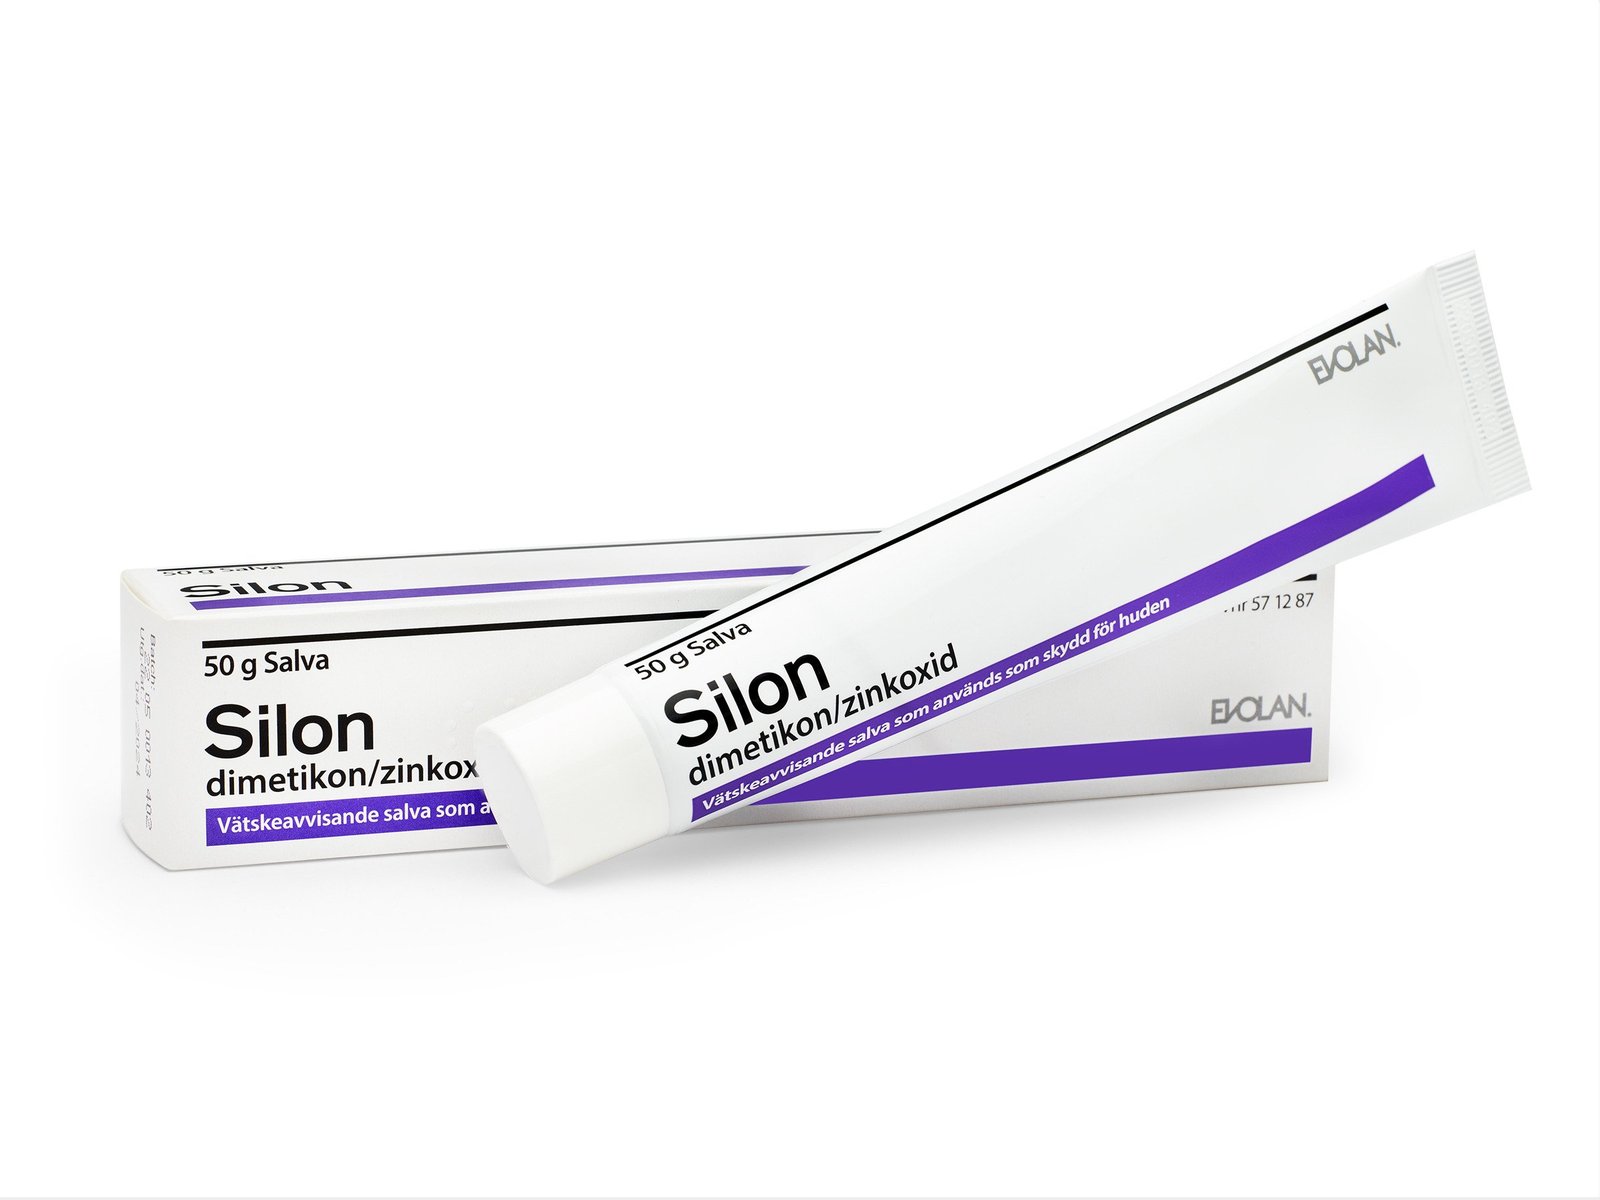 Silon Salva 240 mg/g zinkoxid & 20 mg/g dimetikon 50g